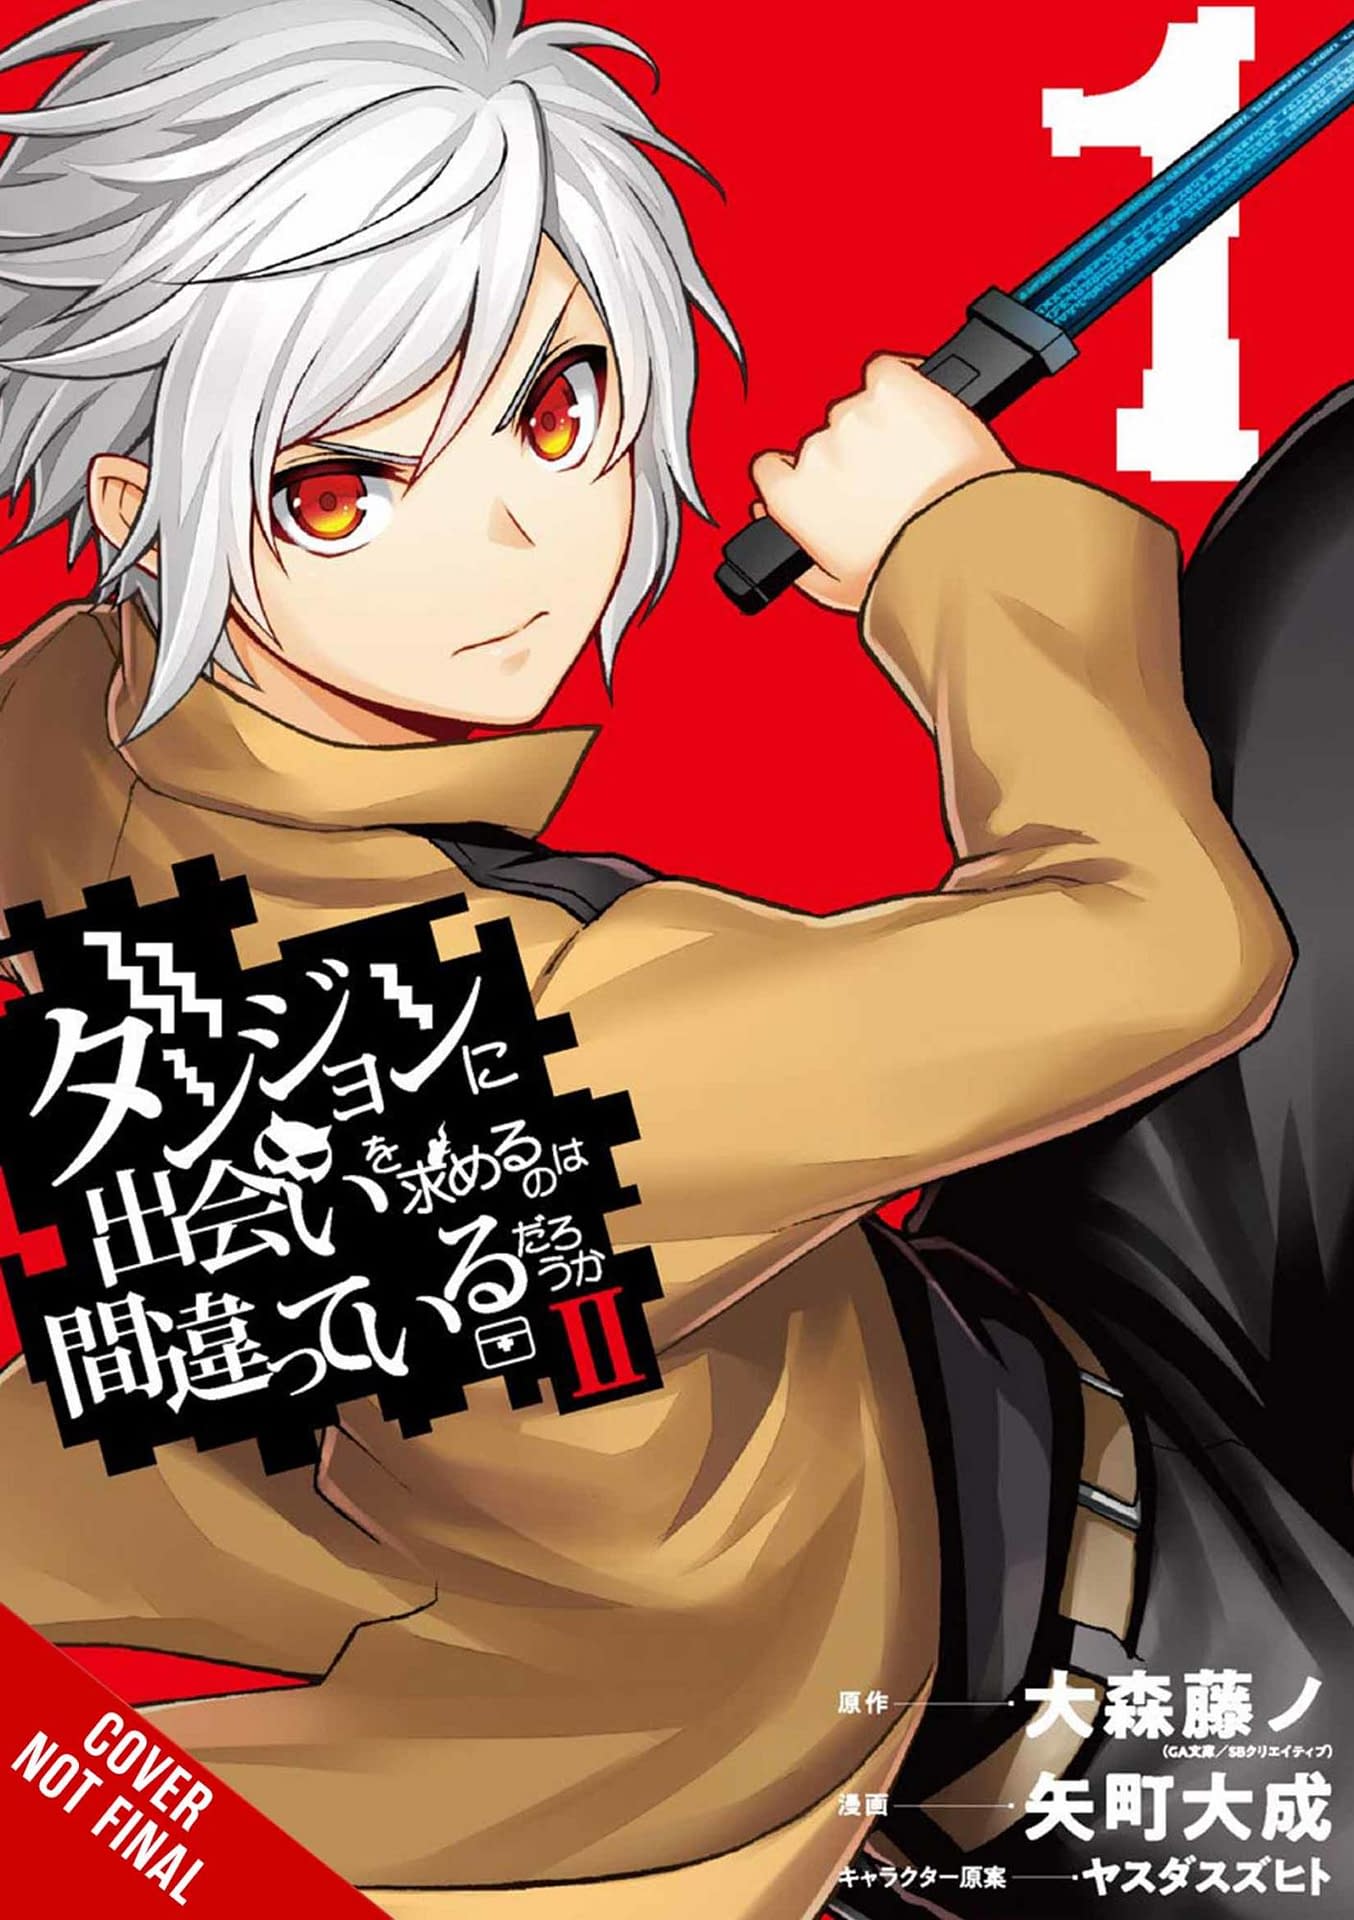 Yen Press Announces New Upcoming Light Novels and Manga Titles